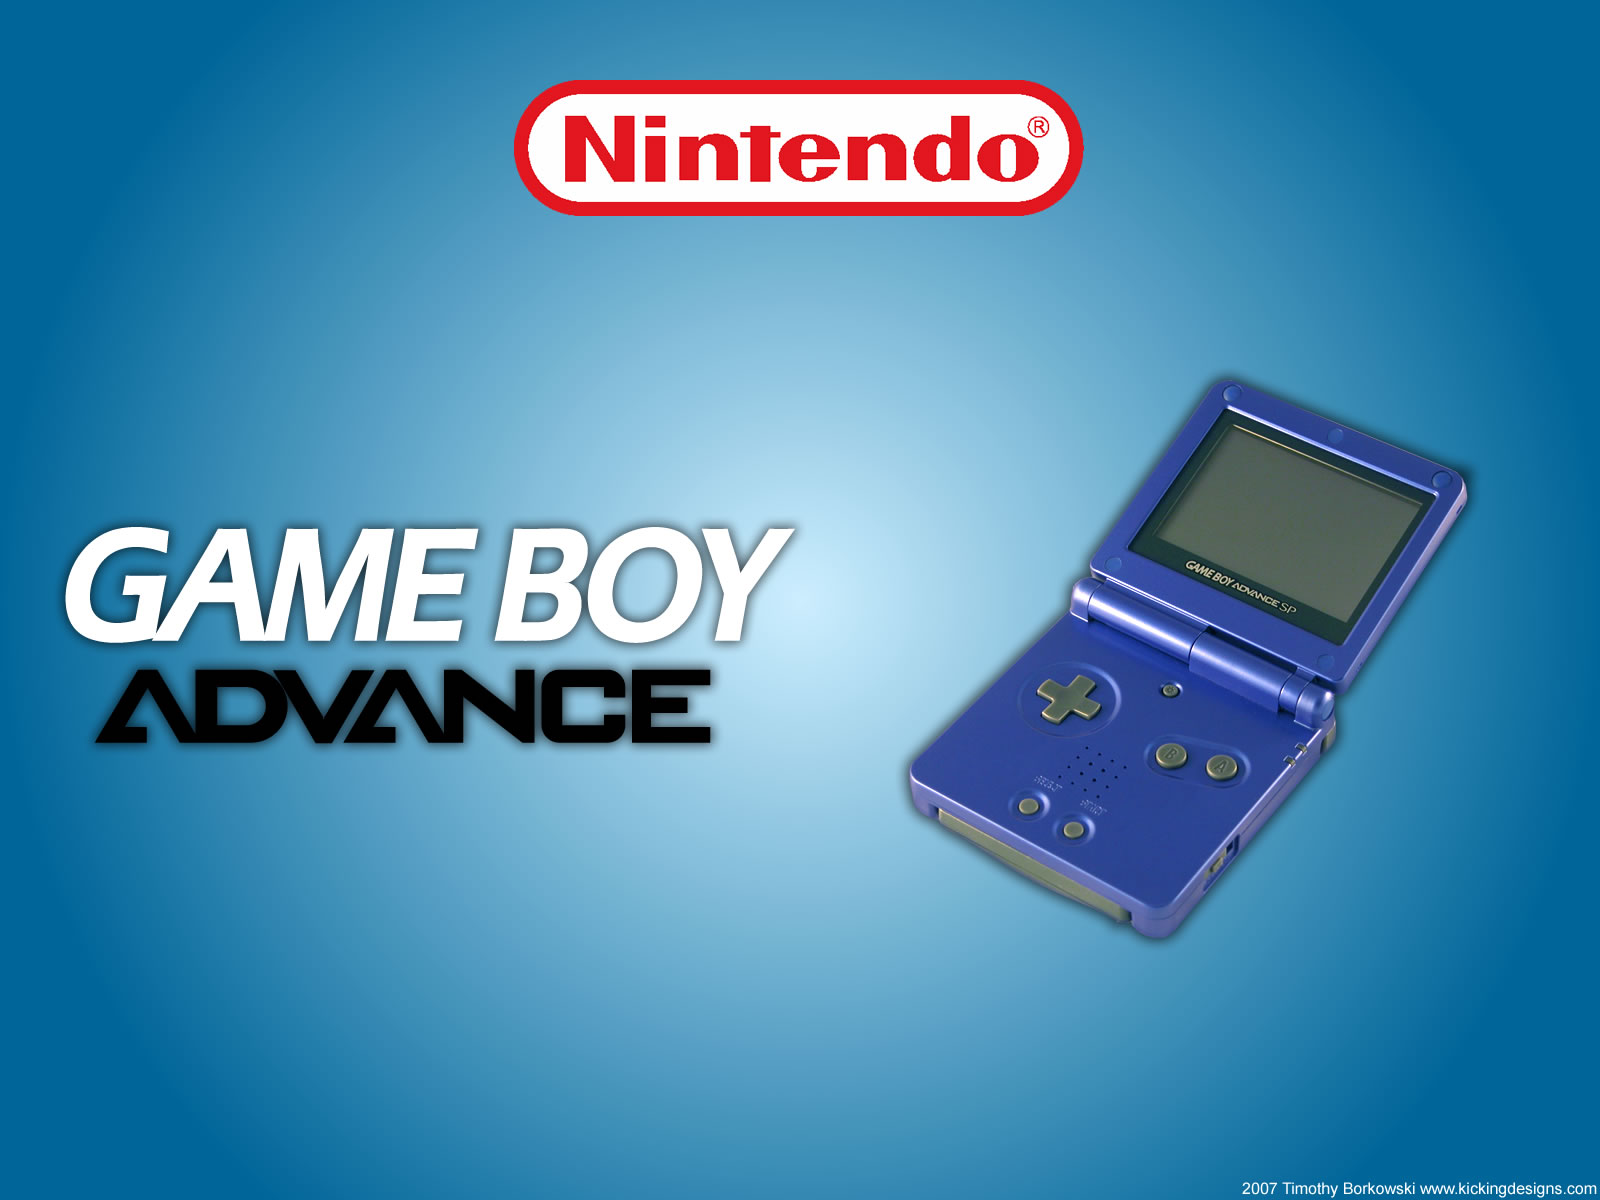 Nintendo boy advance. Нинтендо геймбой Advance. Game boy Advance SP игры. Nintendo game boy Advance игры. Nintendo game boy Advance SP.